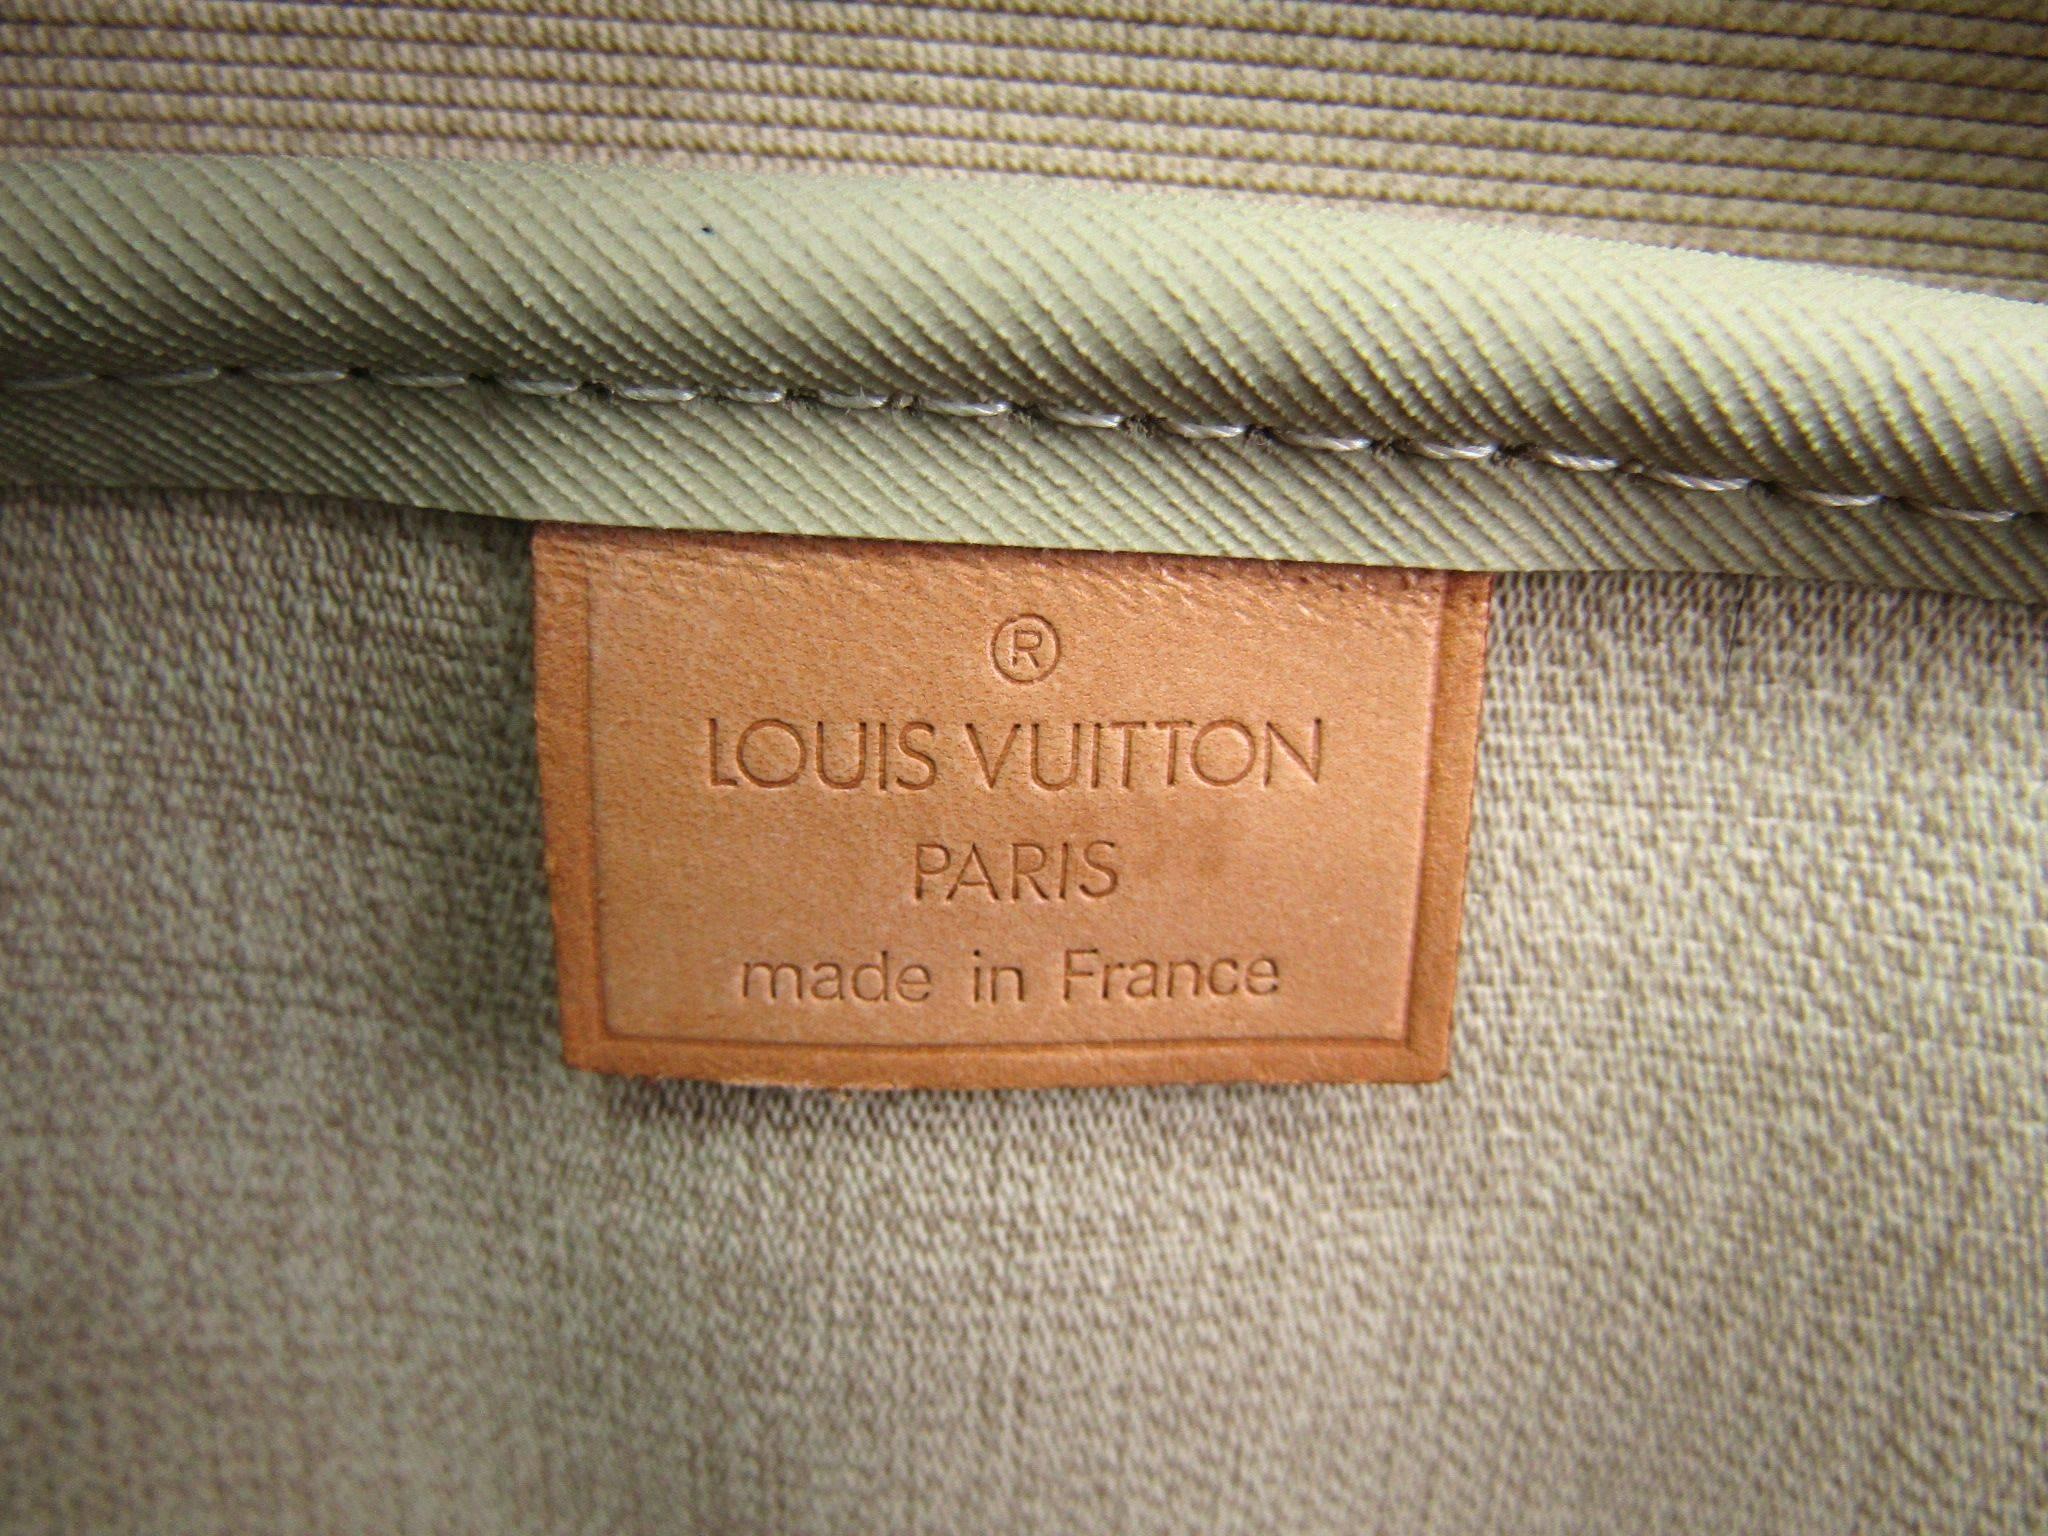  Louis Vuitton Monogram Men's Women's Carryall Travel Top Handle Satchel Bag 2